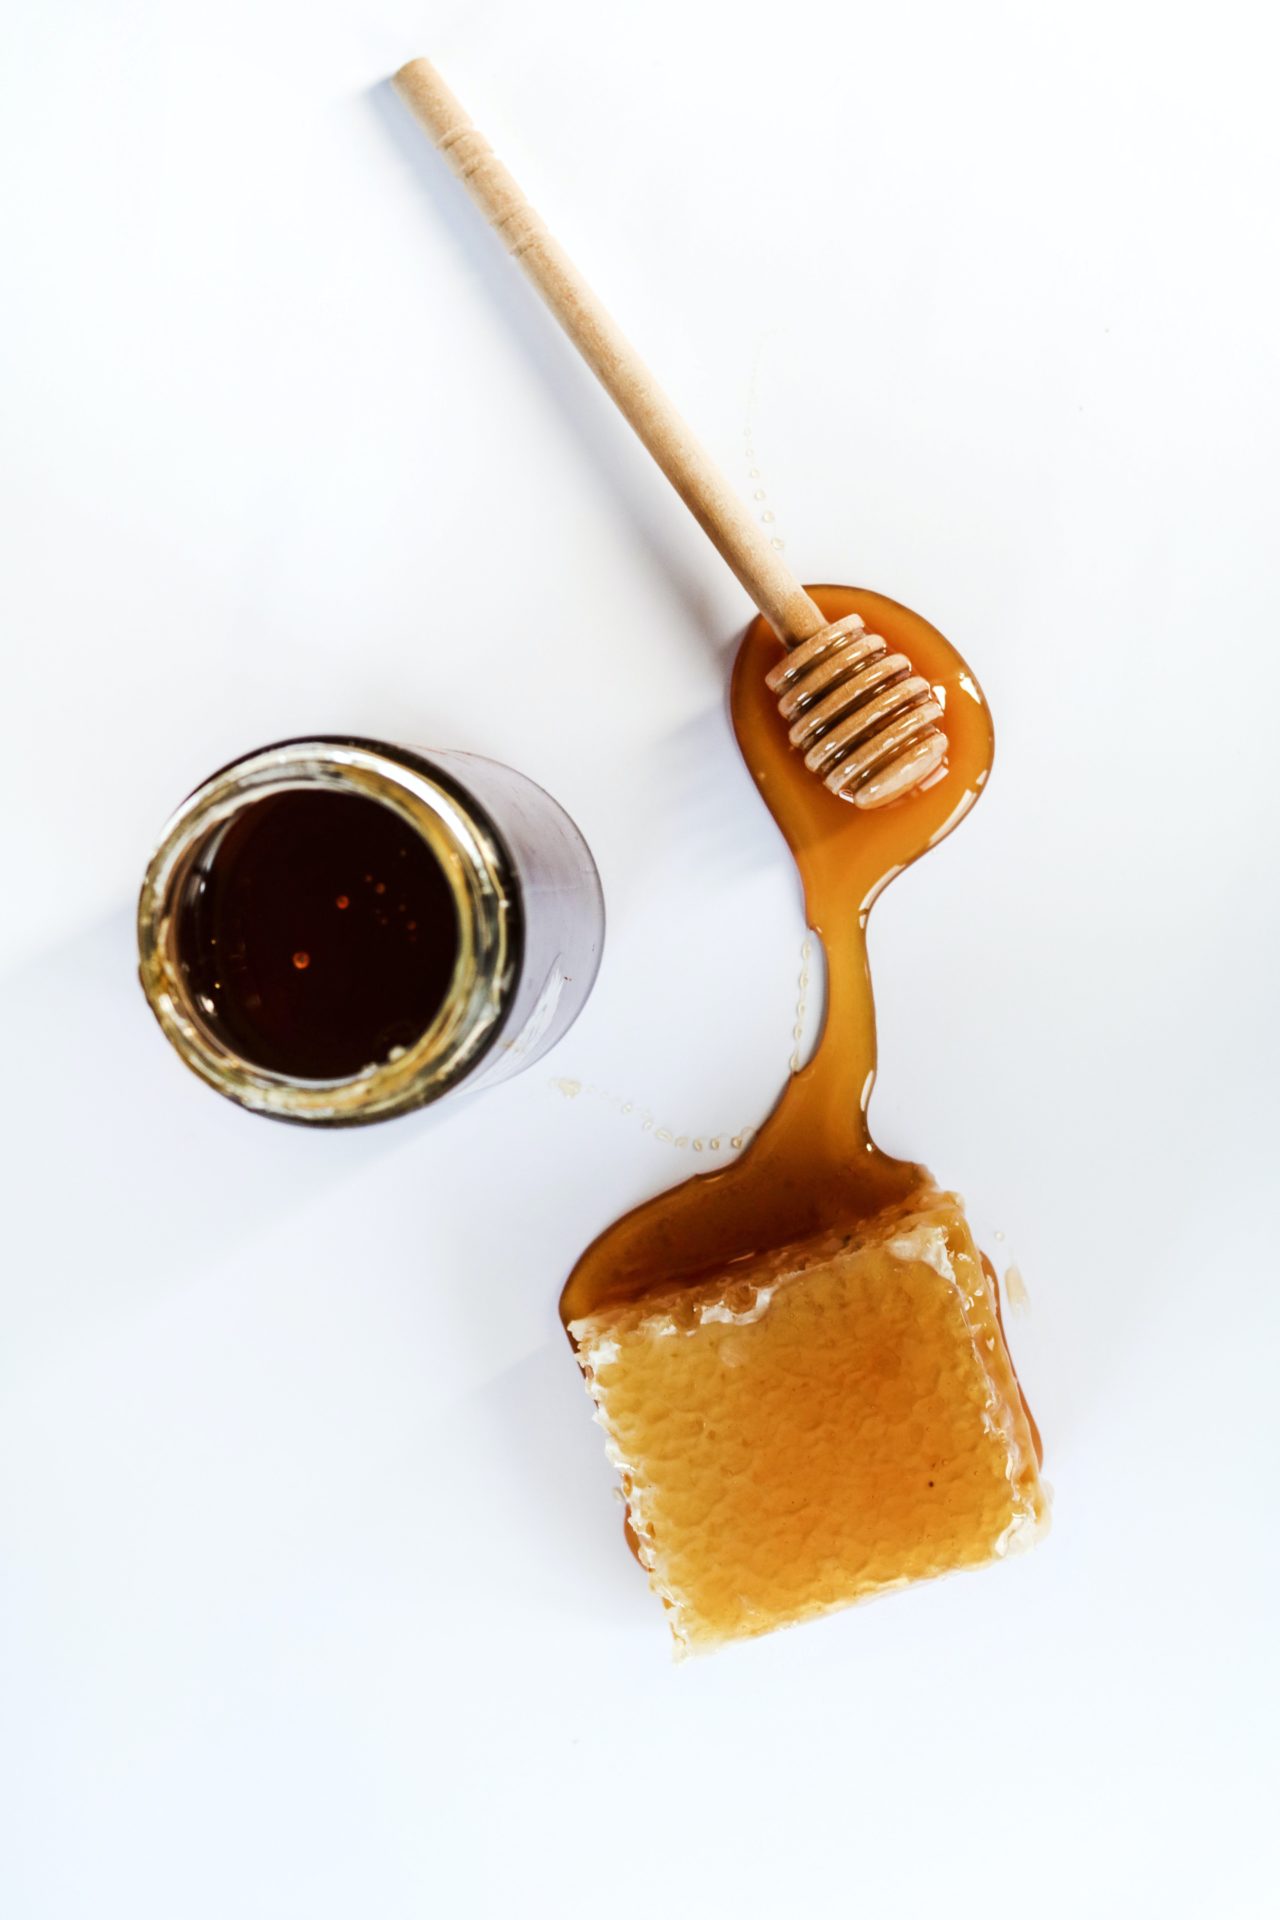 Melibio’s Bee-Free Honey to Launch in Europe Next Year